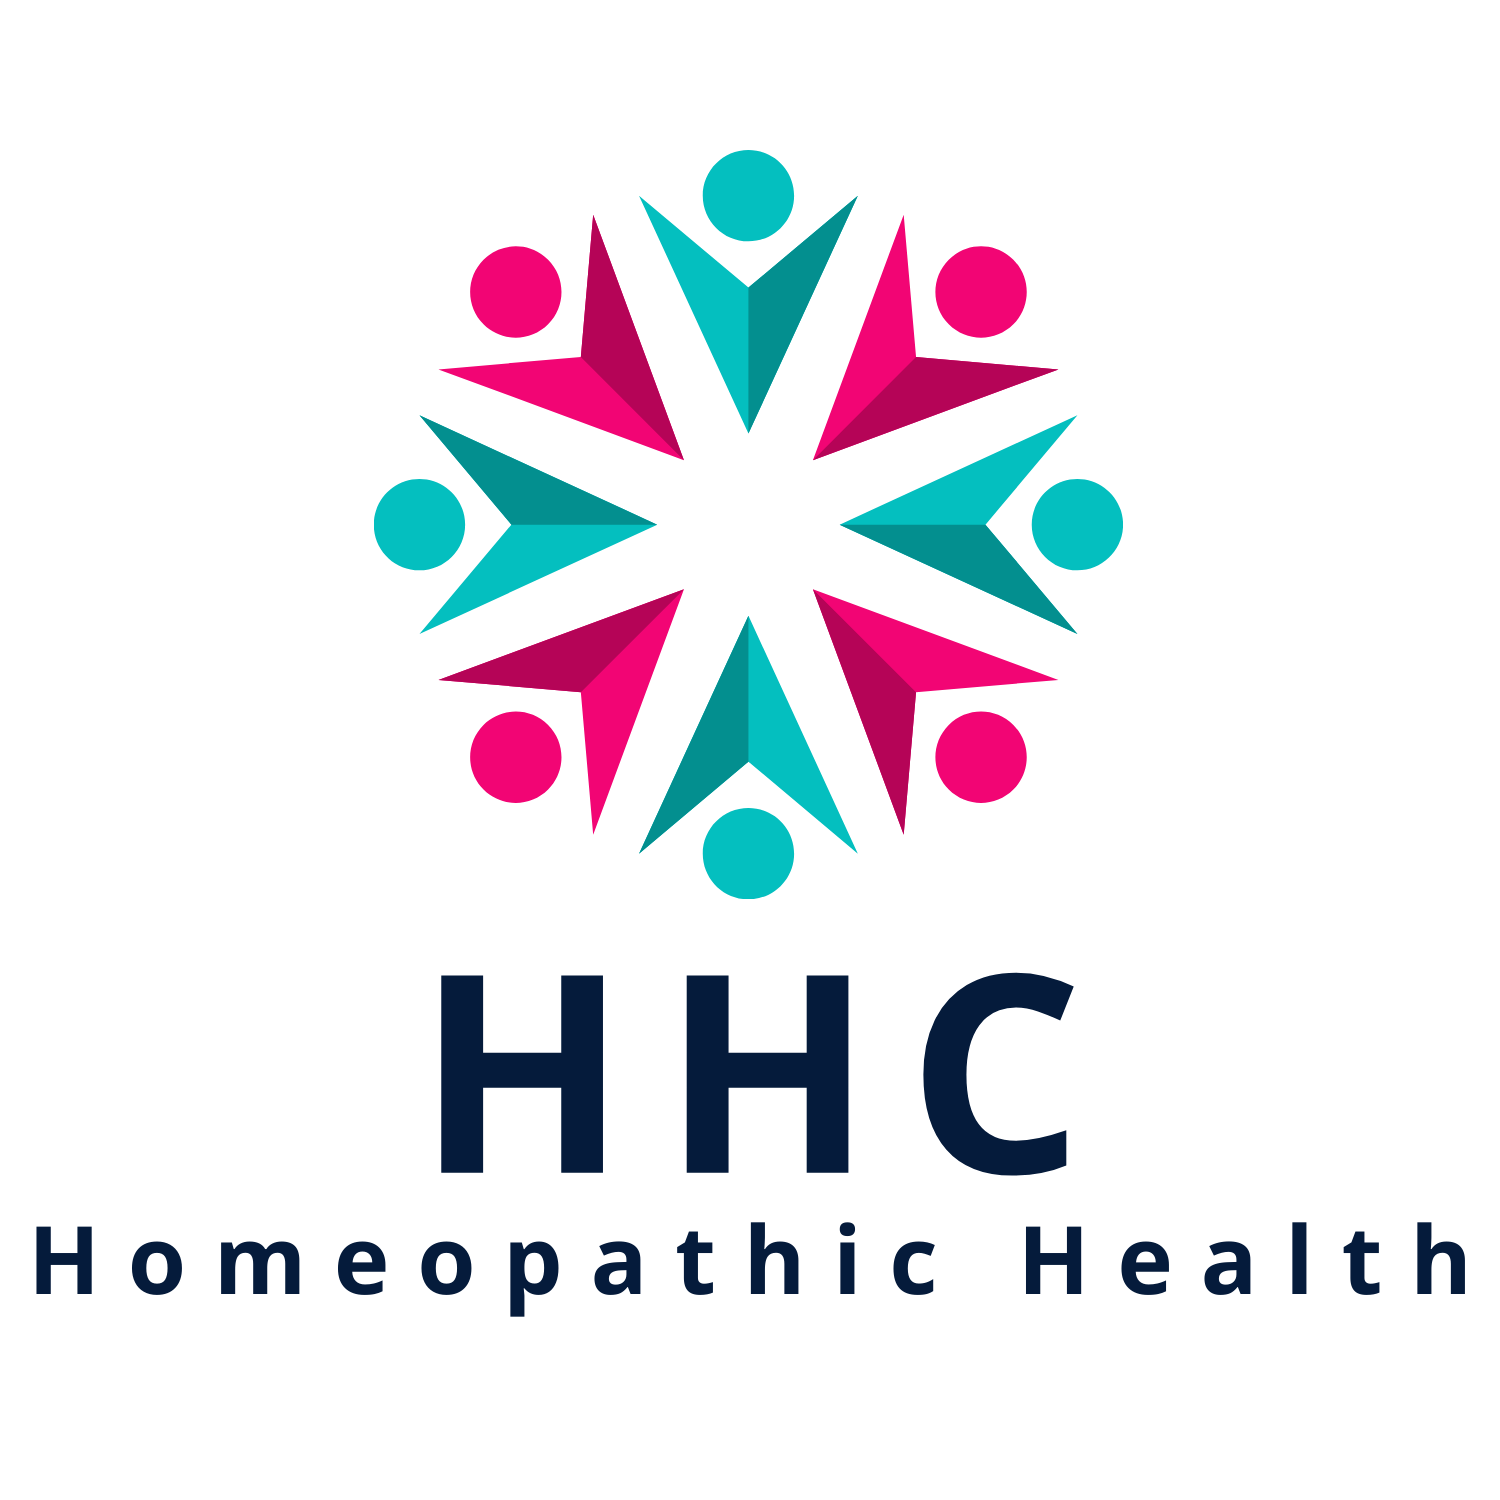 Homeopathic Health